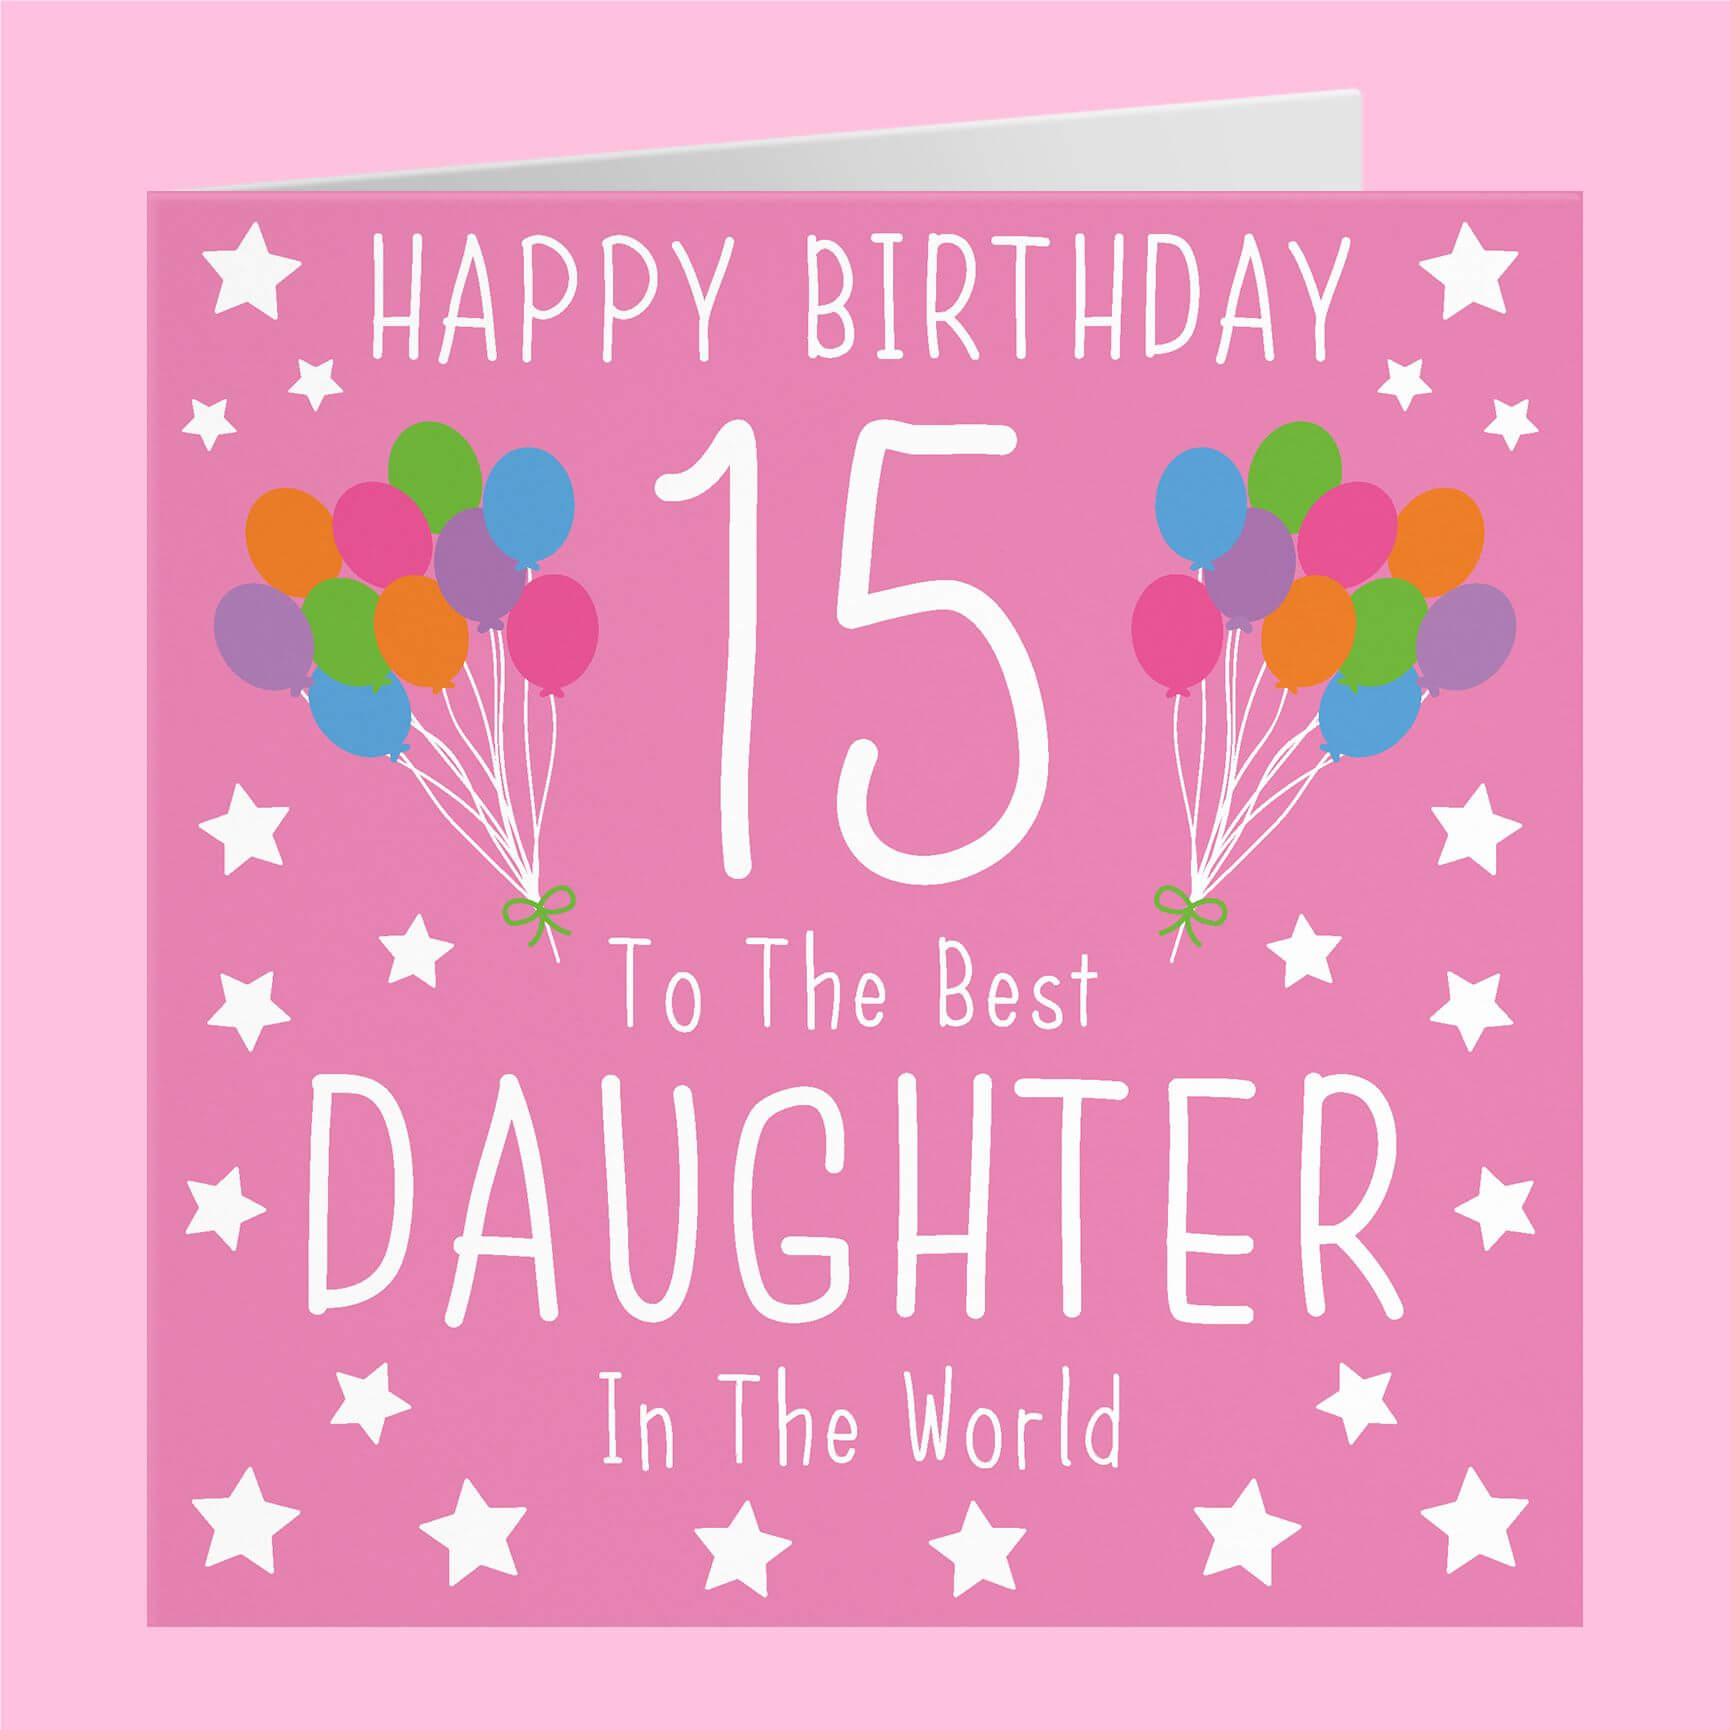 Happy 15th birthday to my amazing daughter!